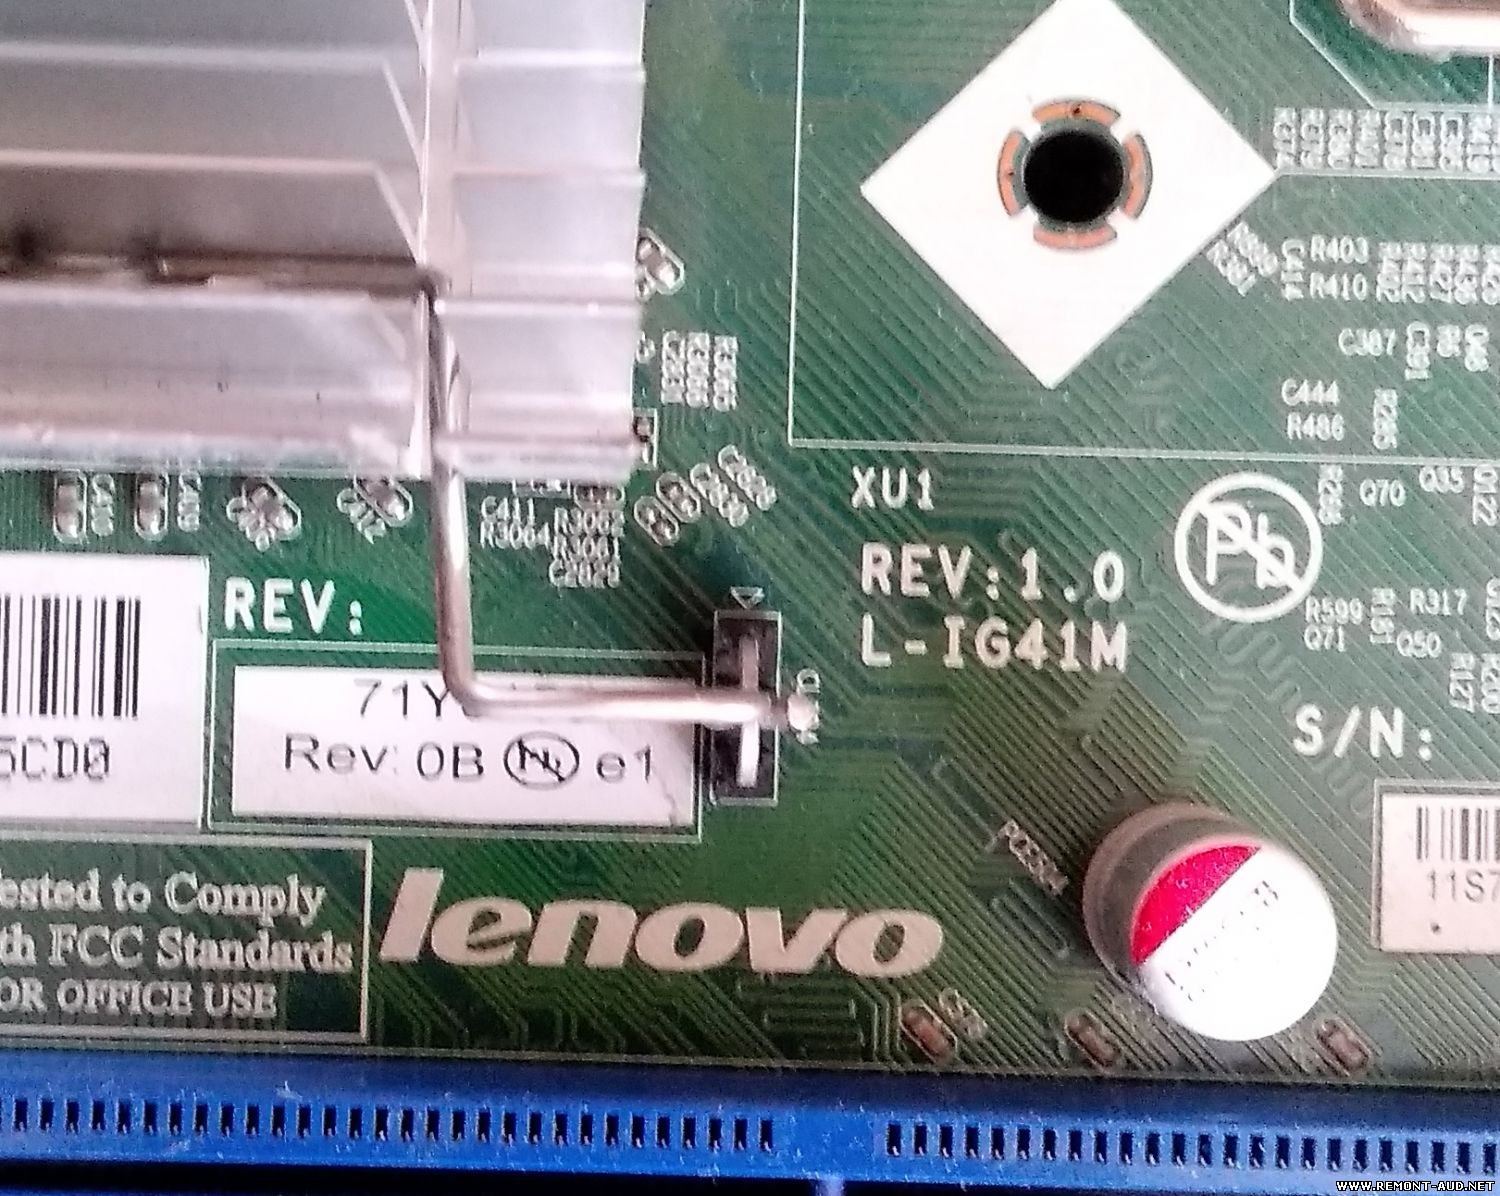 Https rev rev 1. Lenovo ig41m2 v 1.0 manual. L-ig41m v 1.0 BIOS. L-ig41m распиновка. Материнская плата Lenovo l-ig41m распиновка.